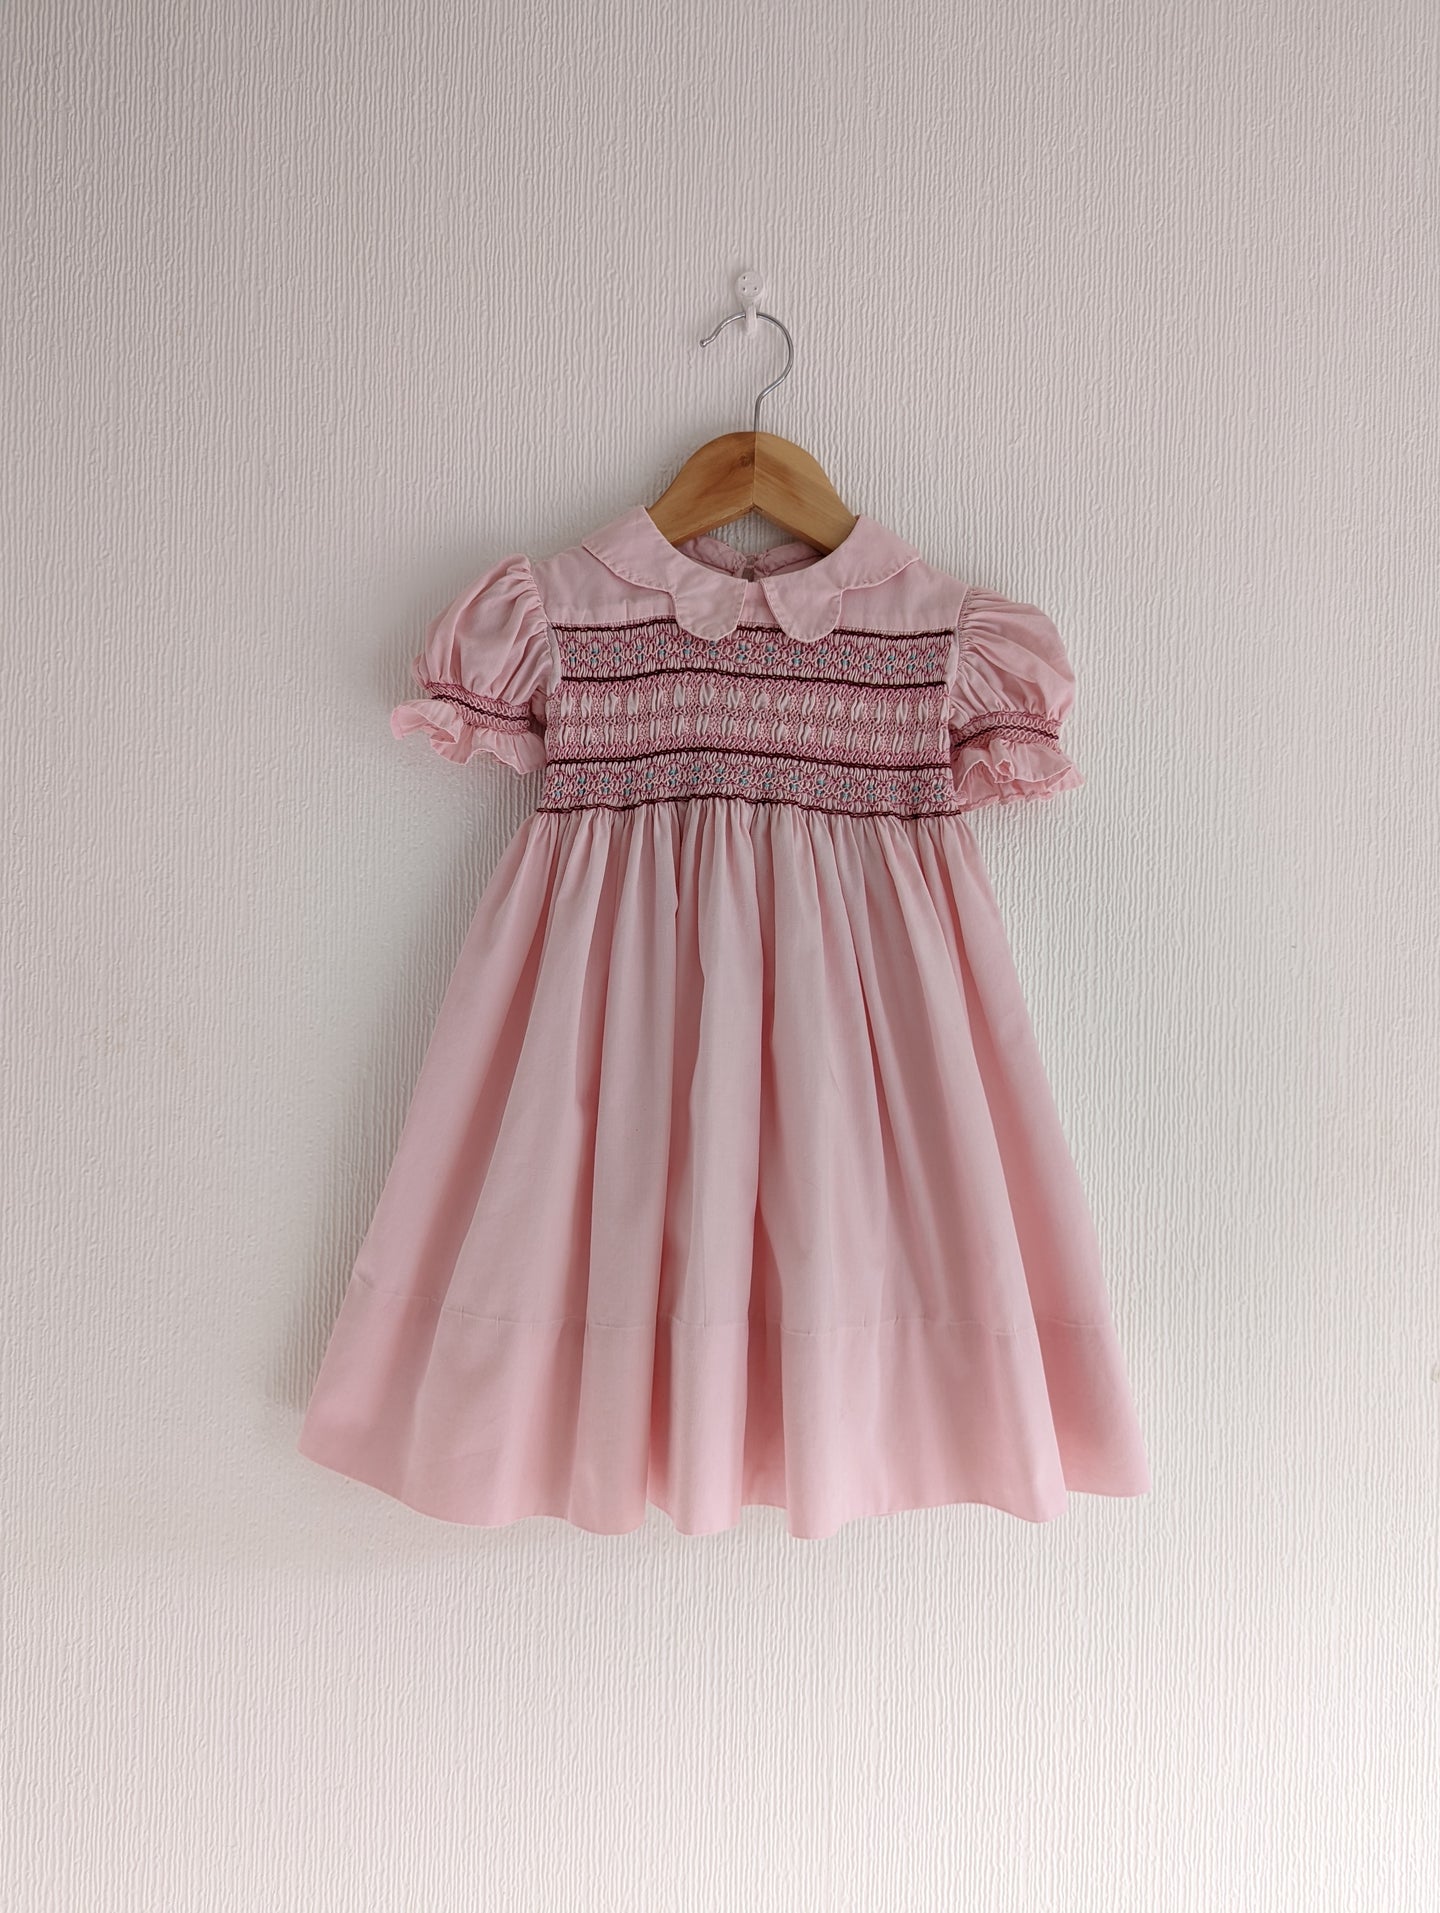 Pretty Pink 1960s Handmade Smocked Dress - 2 Years